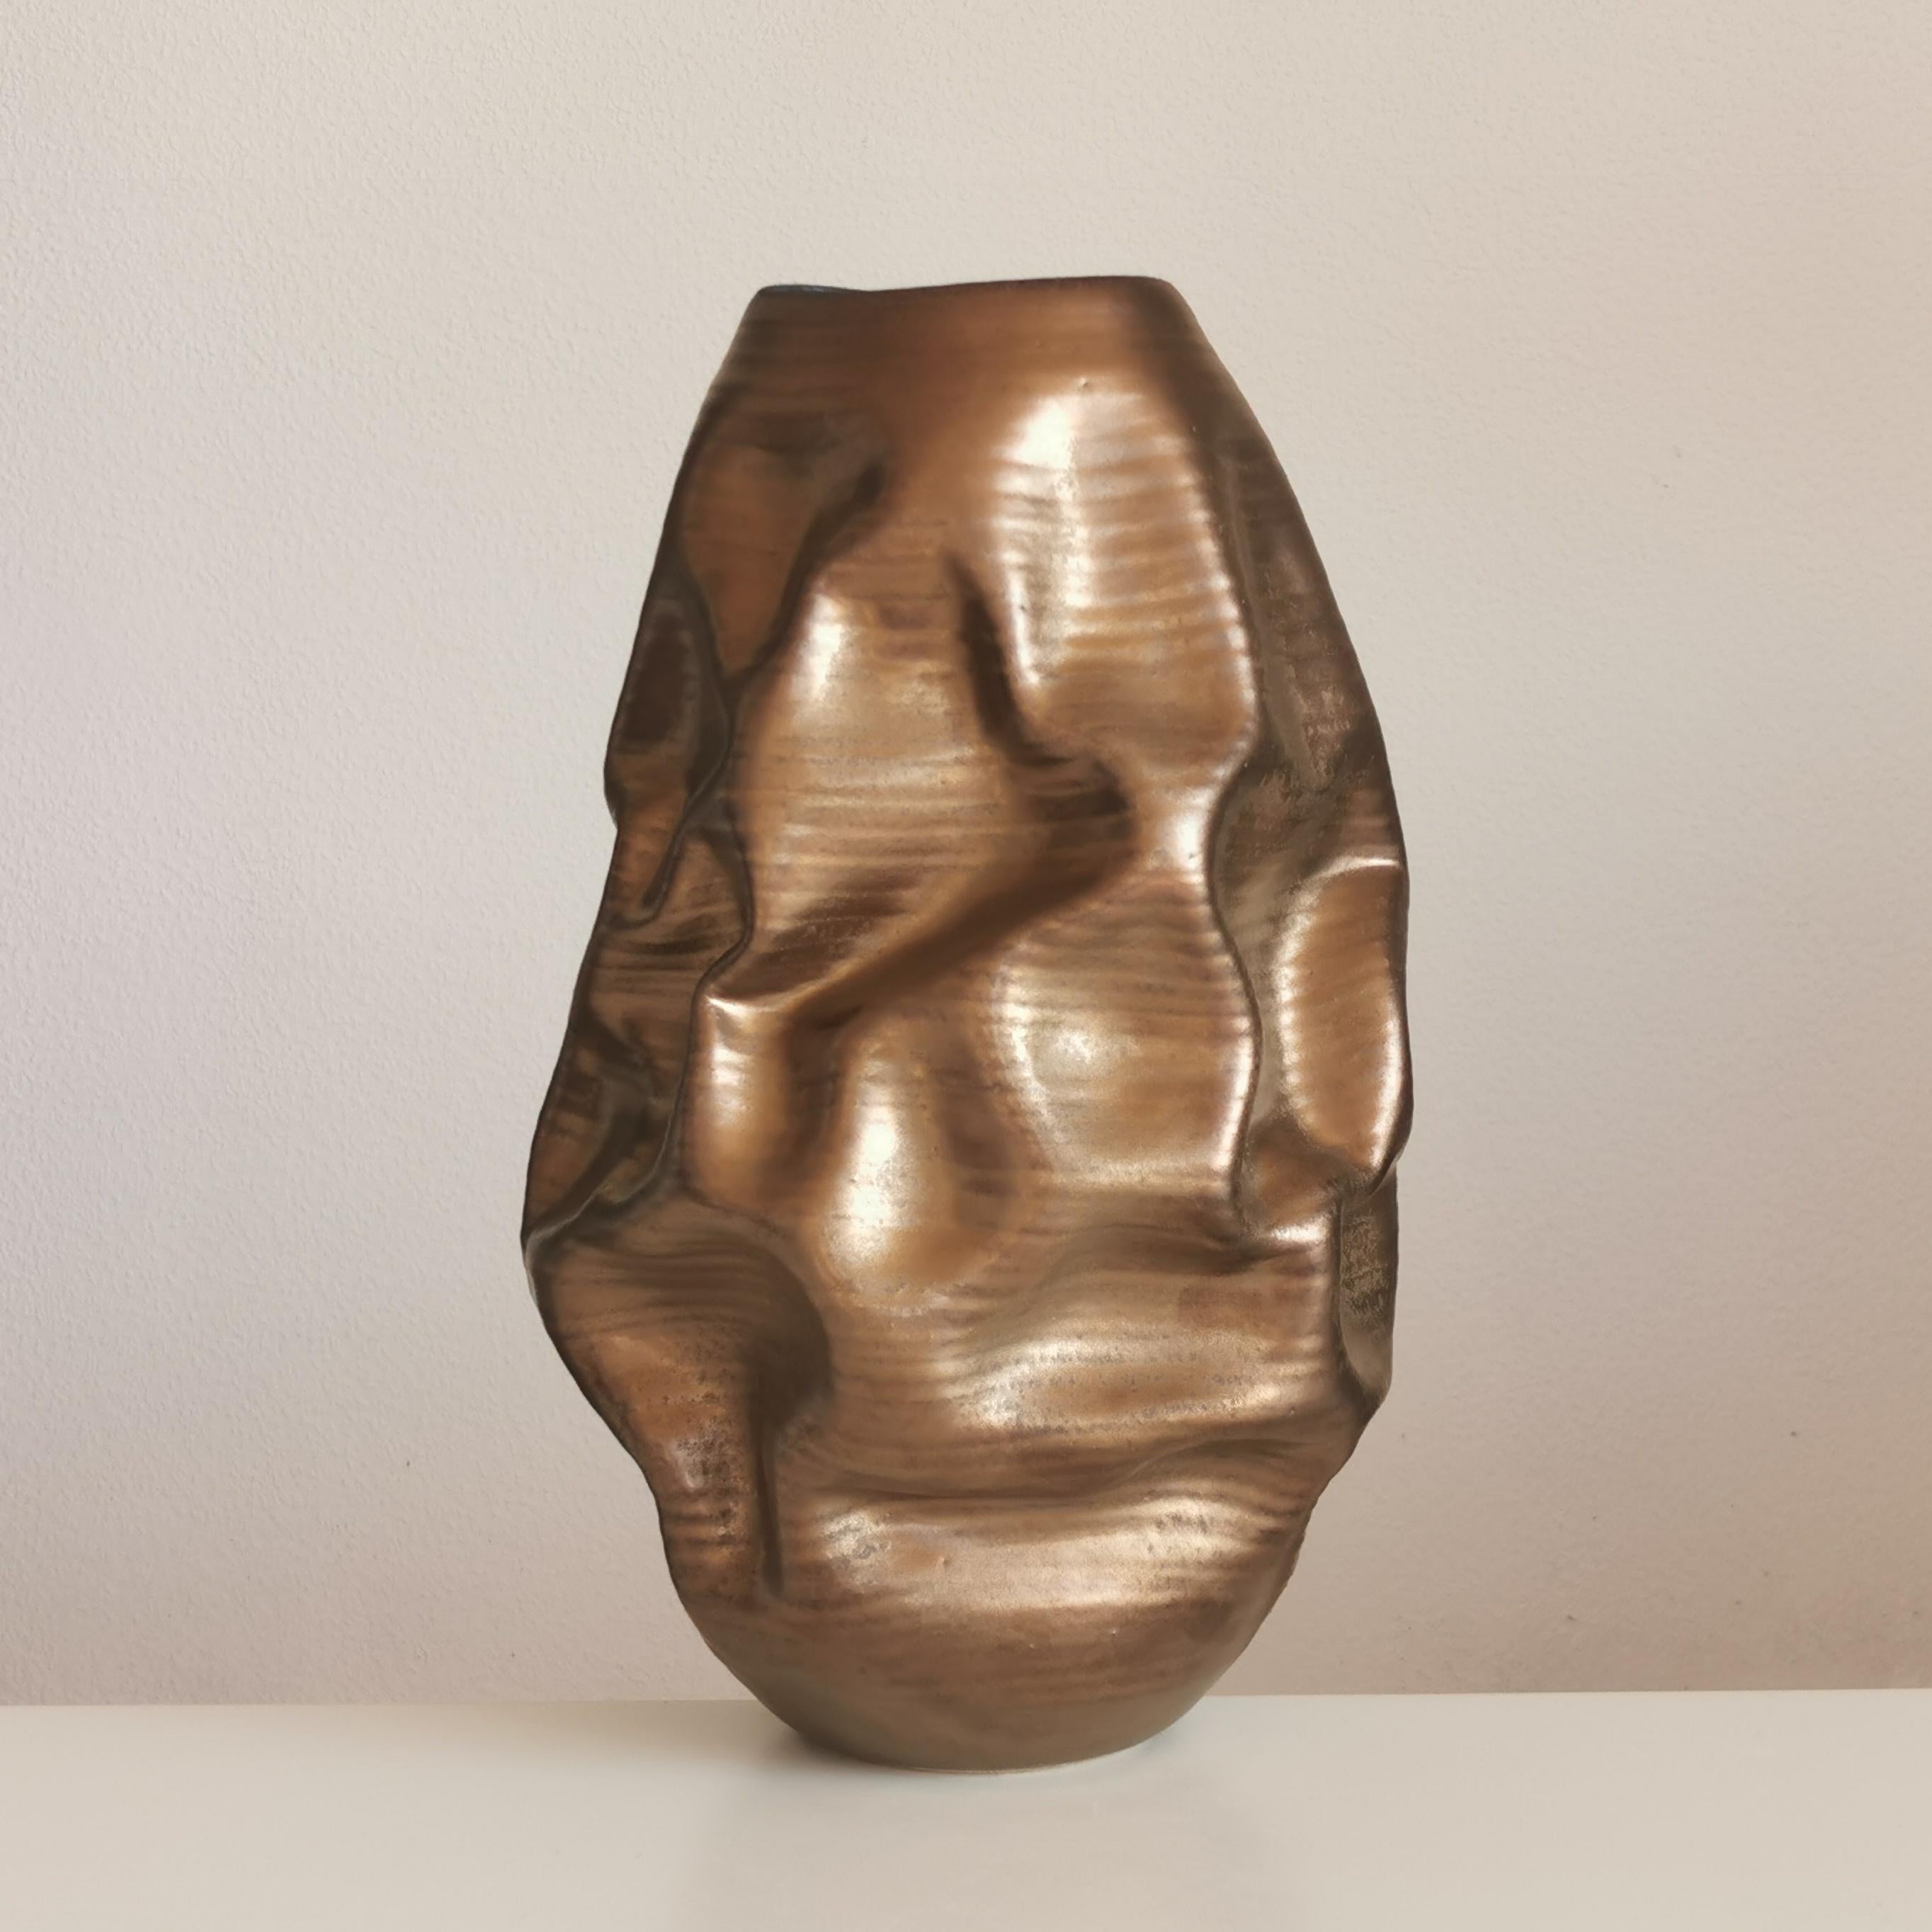 Tall Golden Crumpled Form N.97, Medium Ceramic Sculpture, Objet D'Art 1